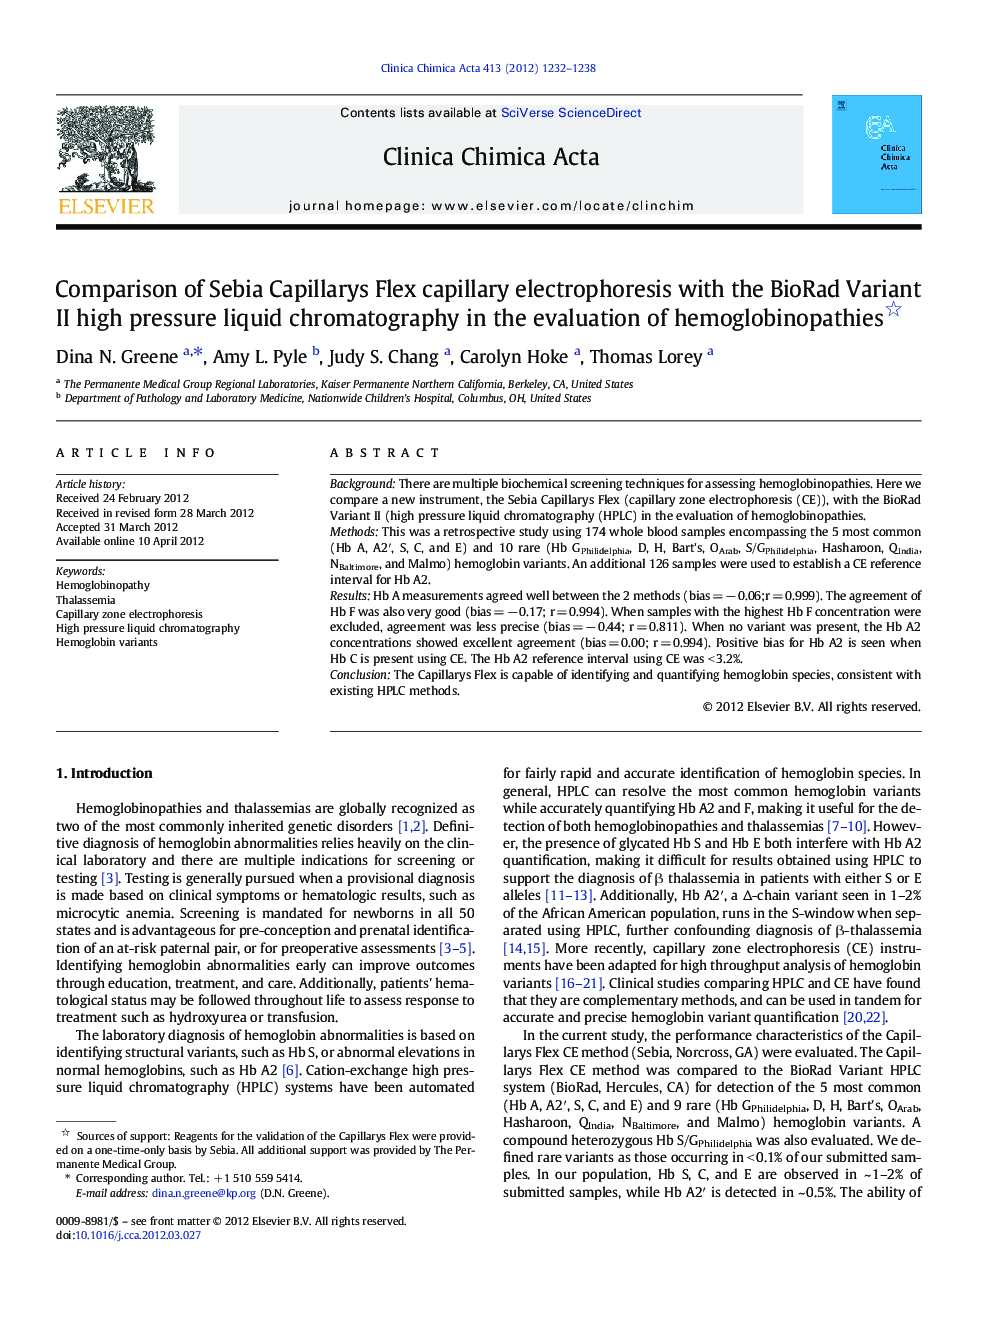 Comparison of Sebia Capillarys Flex capillary electrophoresis with the BioRad Variant II high pressure liquid chromatography in the evaluation of hemoglobinopathies